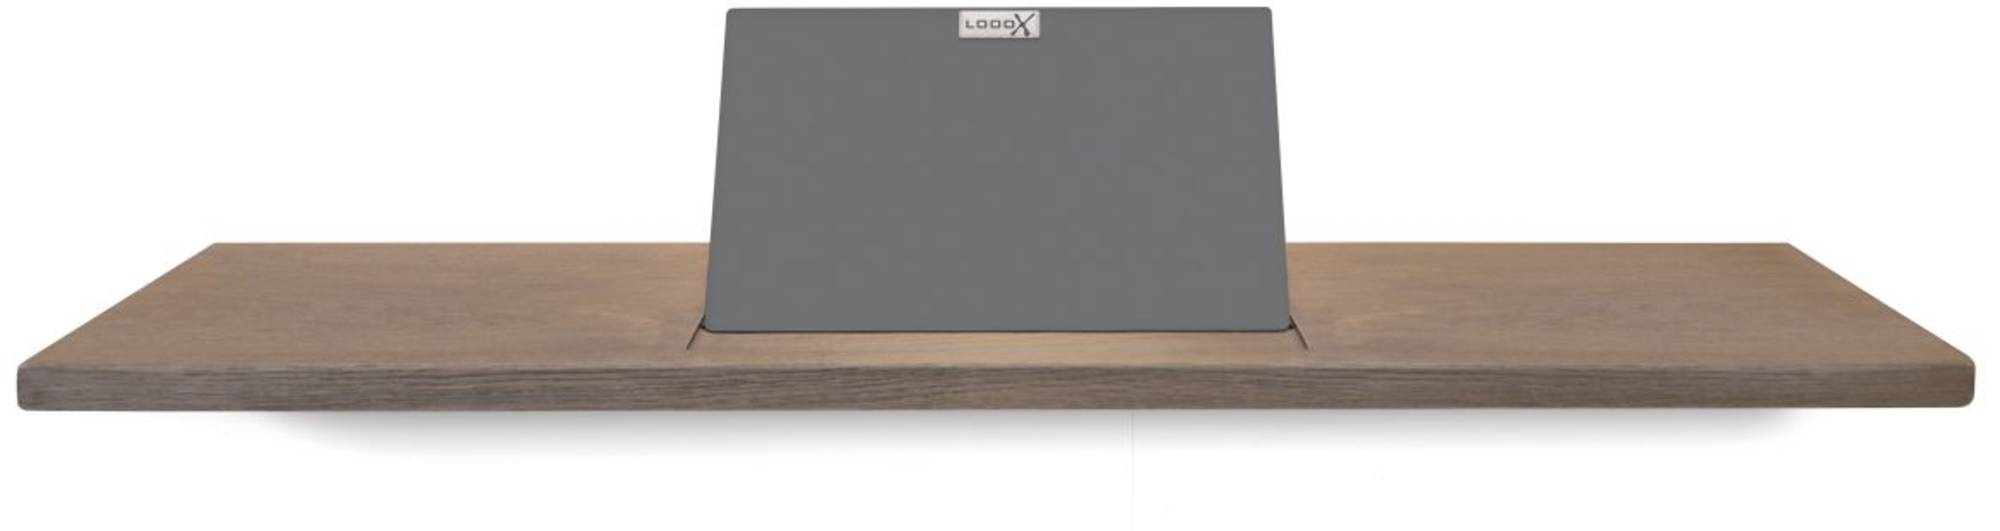 Looox Wooden Collection bath shelf met houder antraciet eiken/antraciet